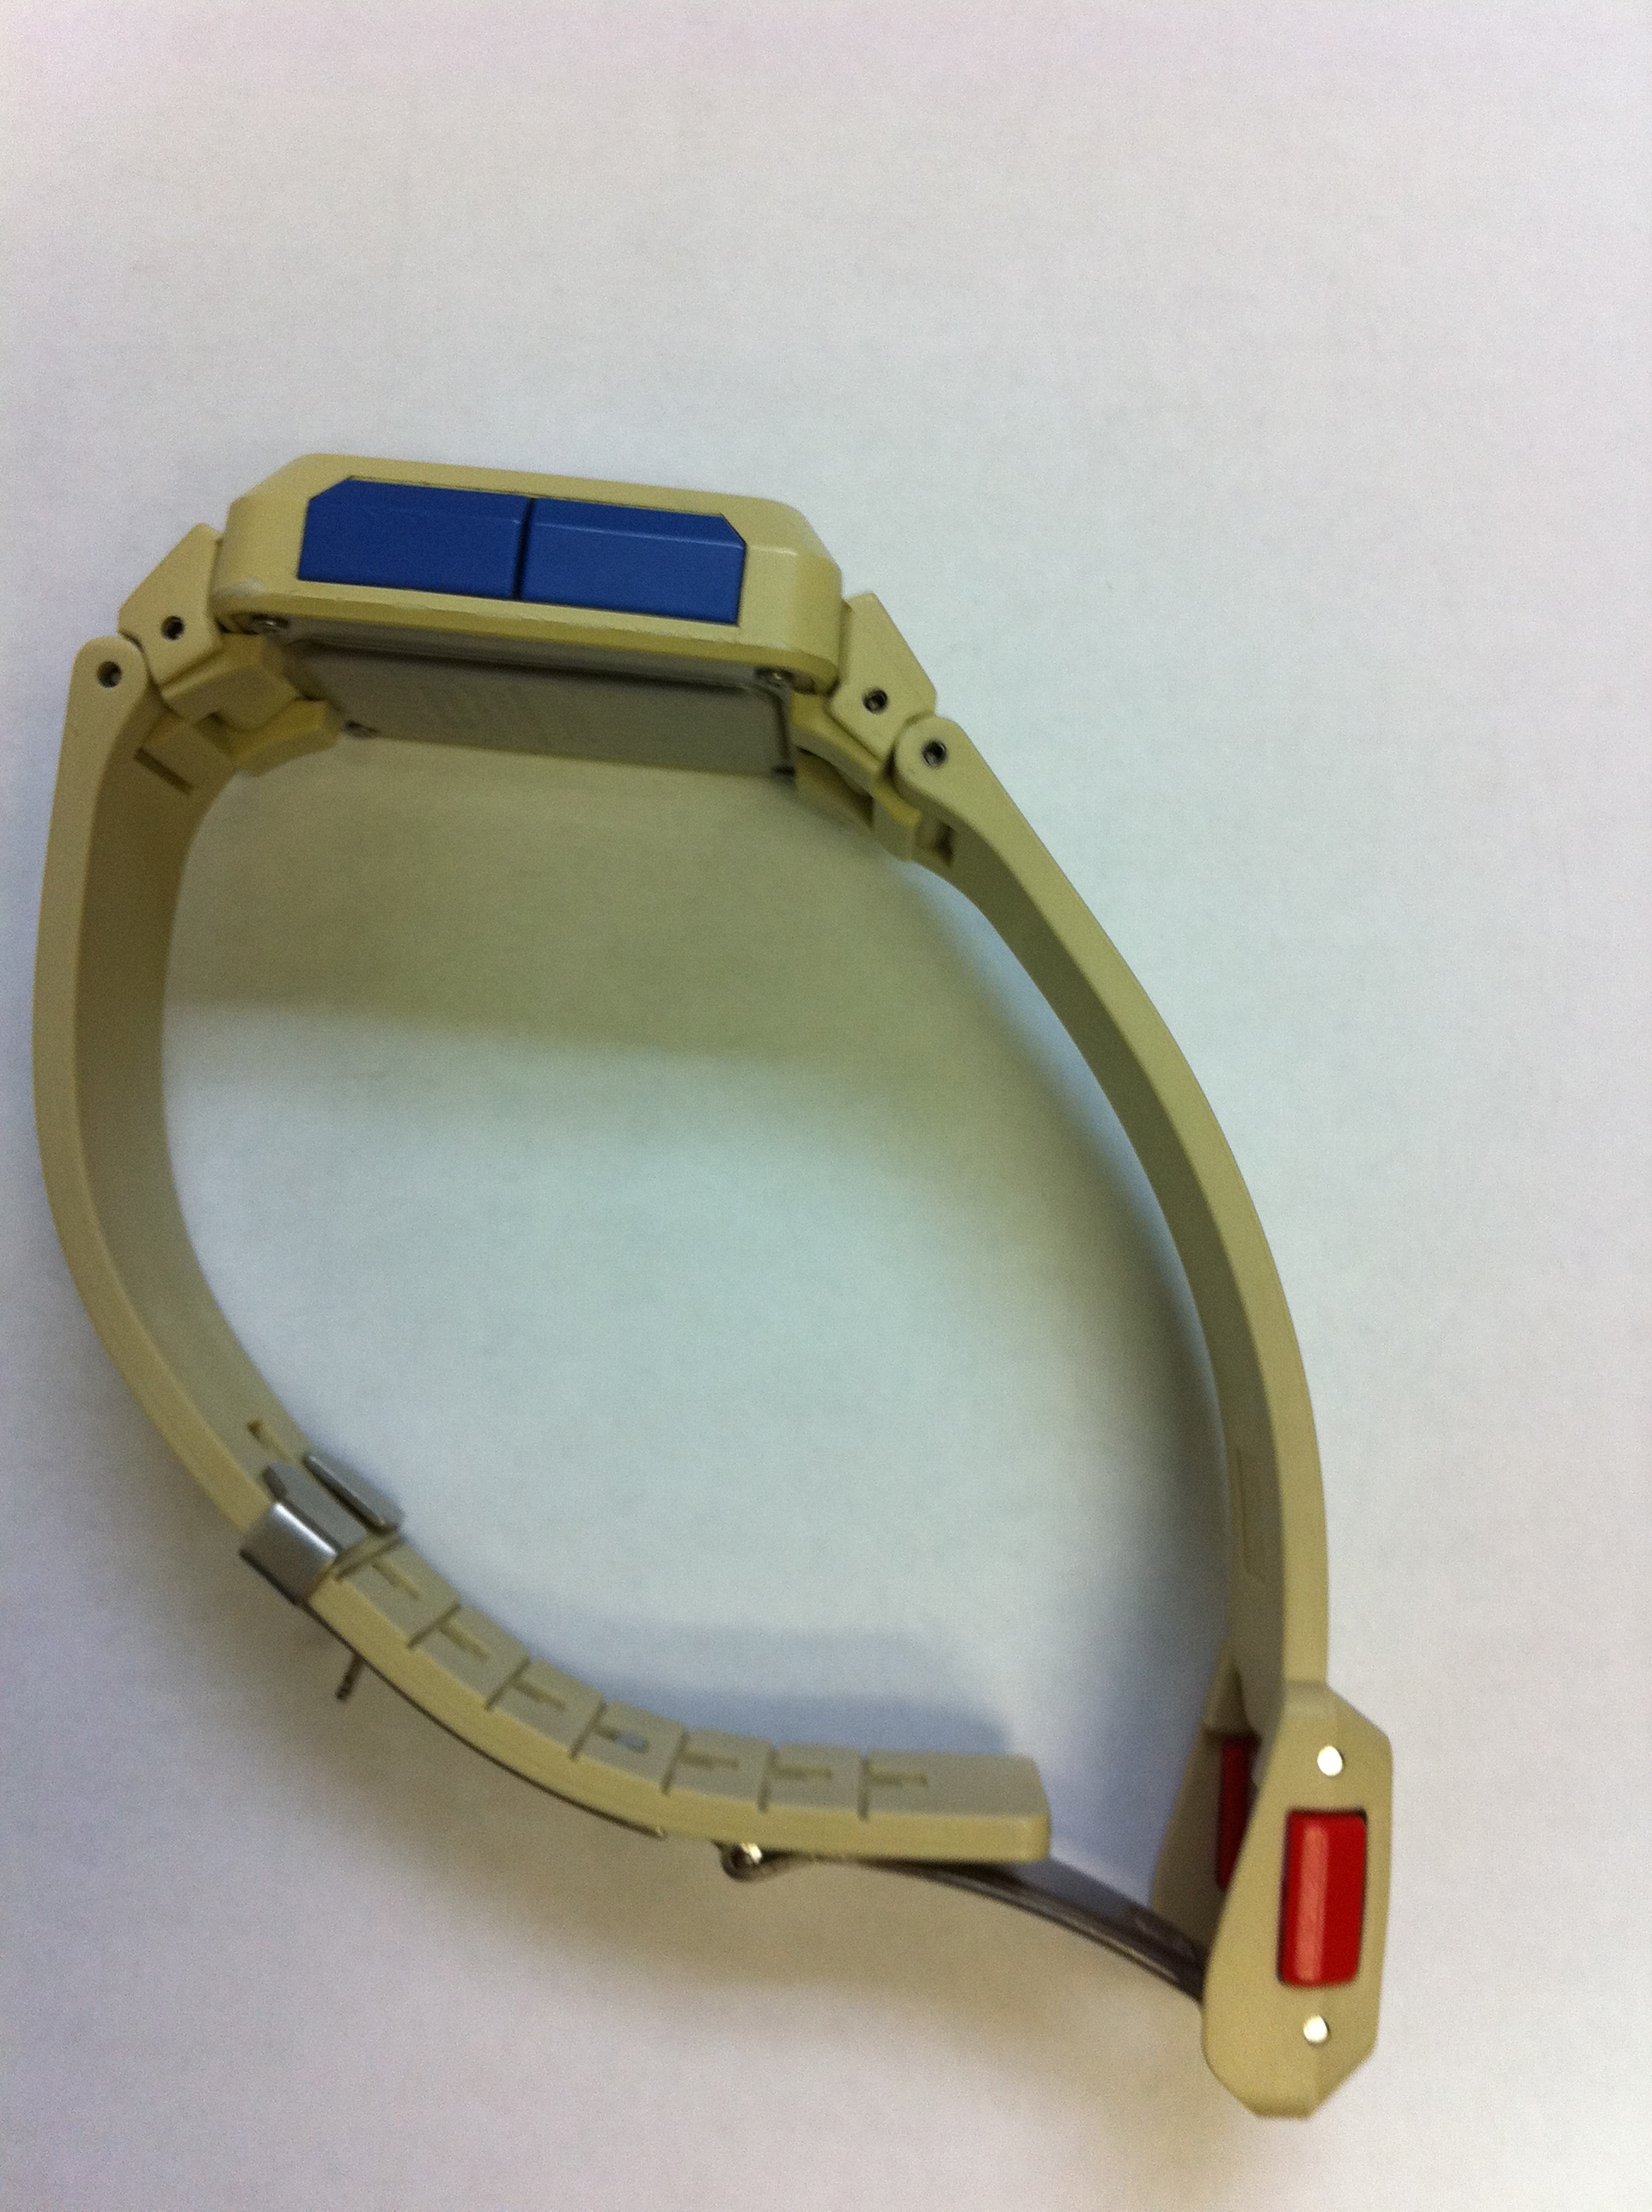 FS - Used but SUPER RARE Seiko H-Timetron SLIM Watch - $300 OBO |  WatchCharts